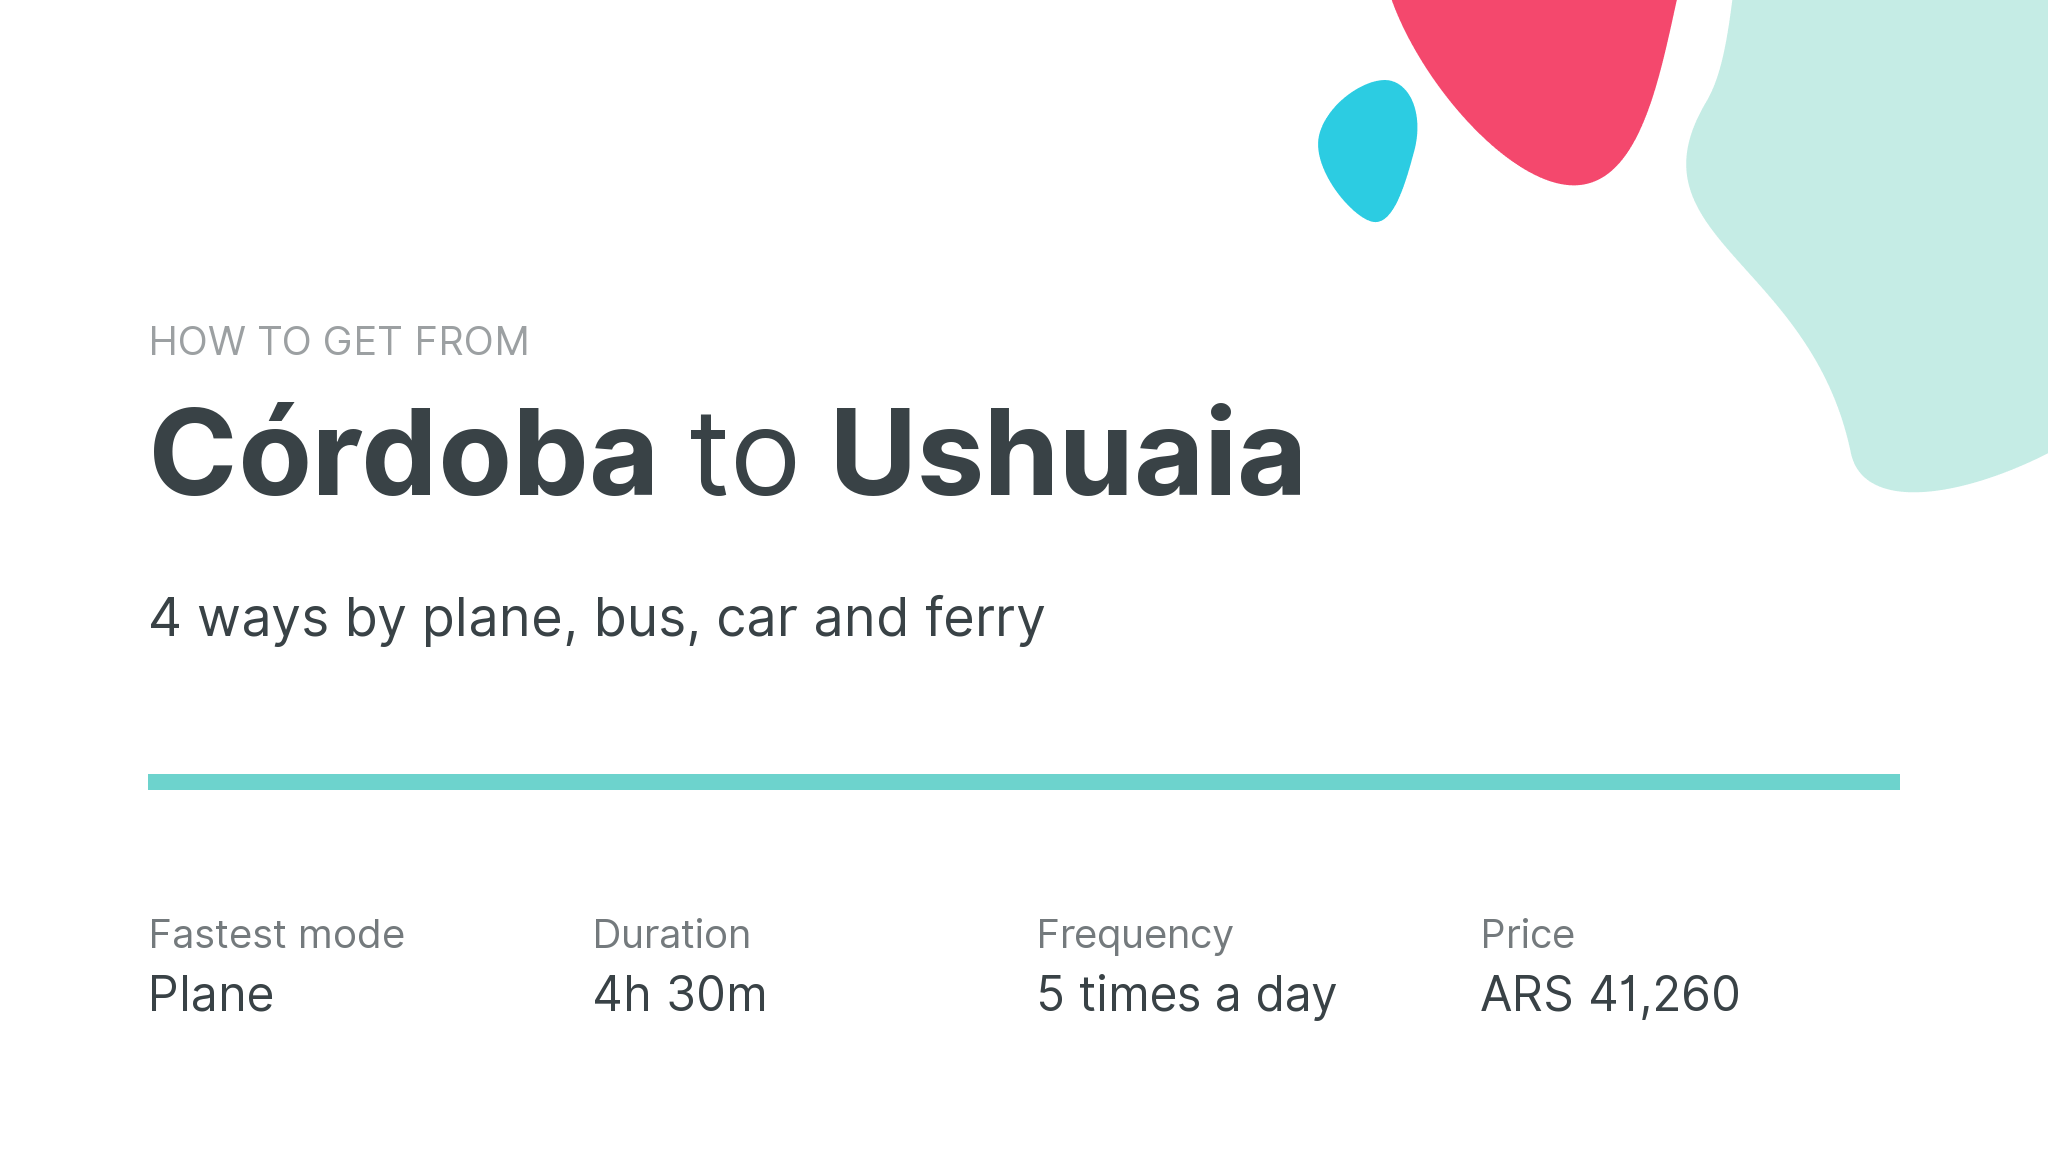 How do I get from Córdoba to Ushuaia